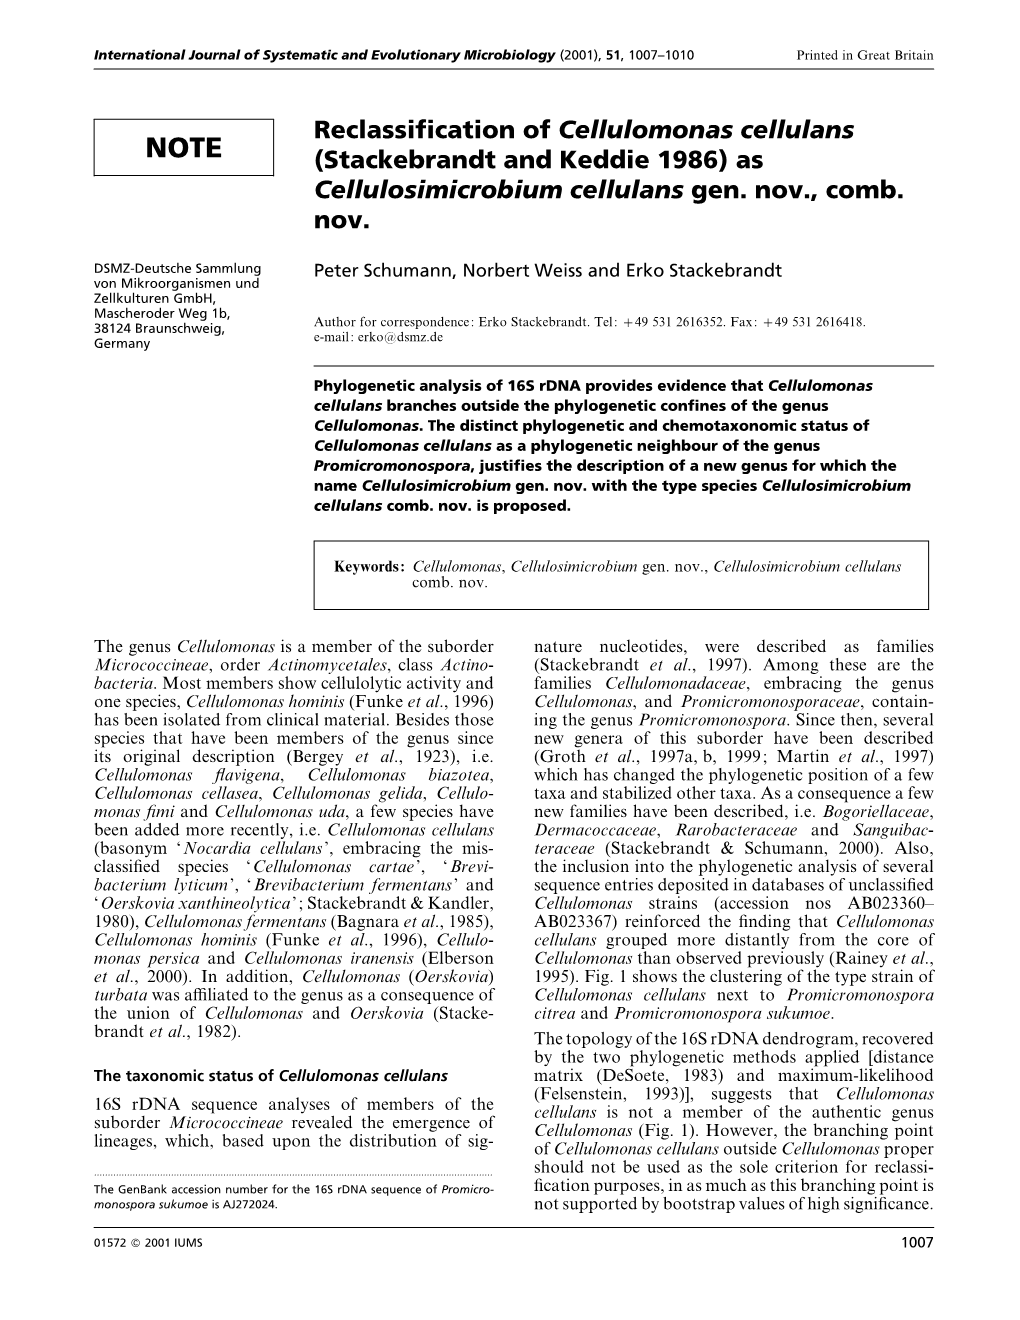 Reclassification of Cellulomonas Cellulans (Stackebrandt and Keddie 1986) As Cellulosimicrobium Cellulans Gen. Nov., Comb. Nov